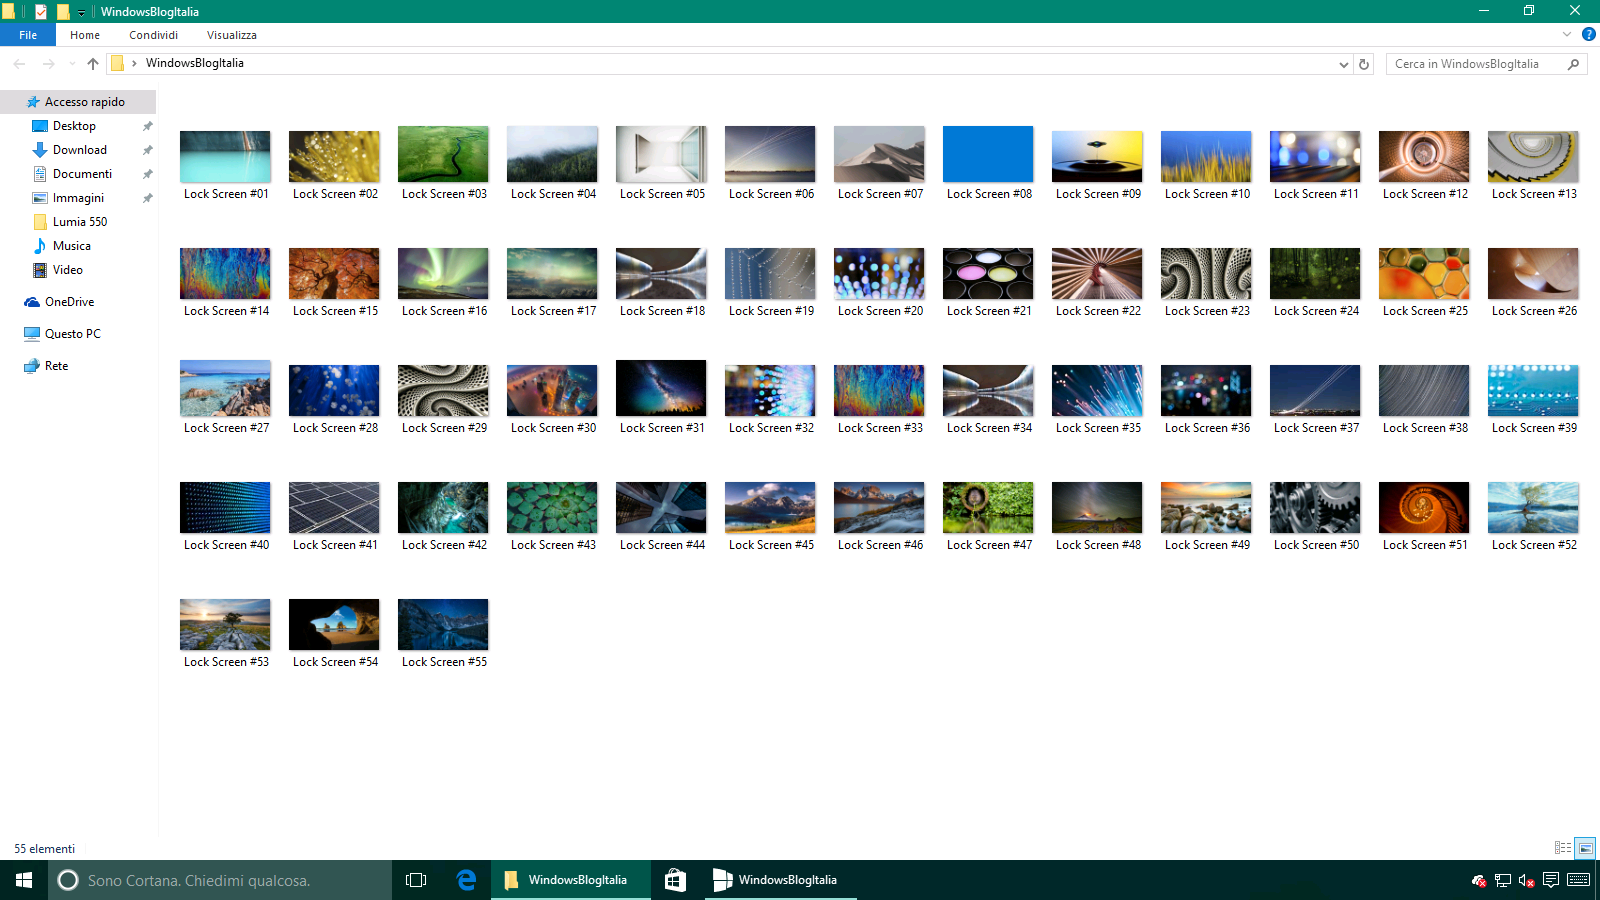 Windows Spotlight Windows 10 immagini